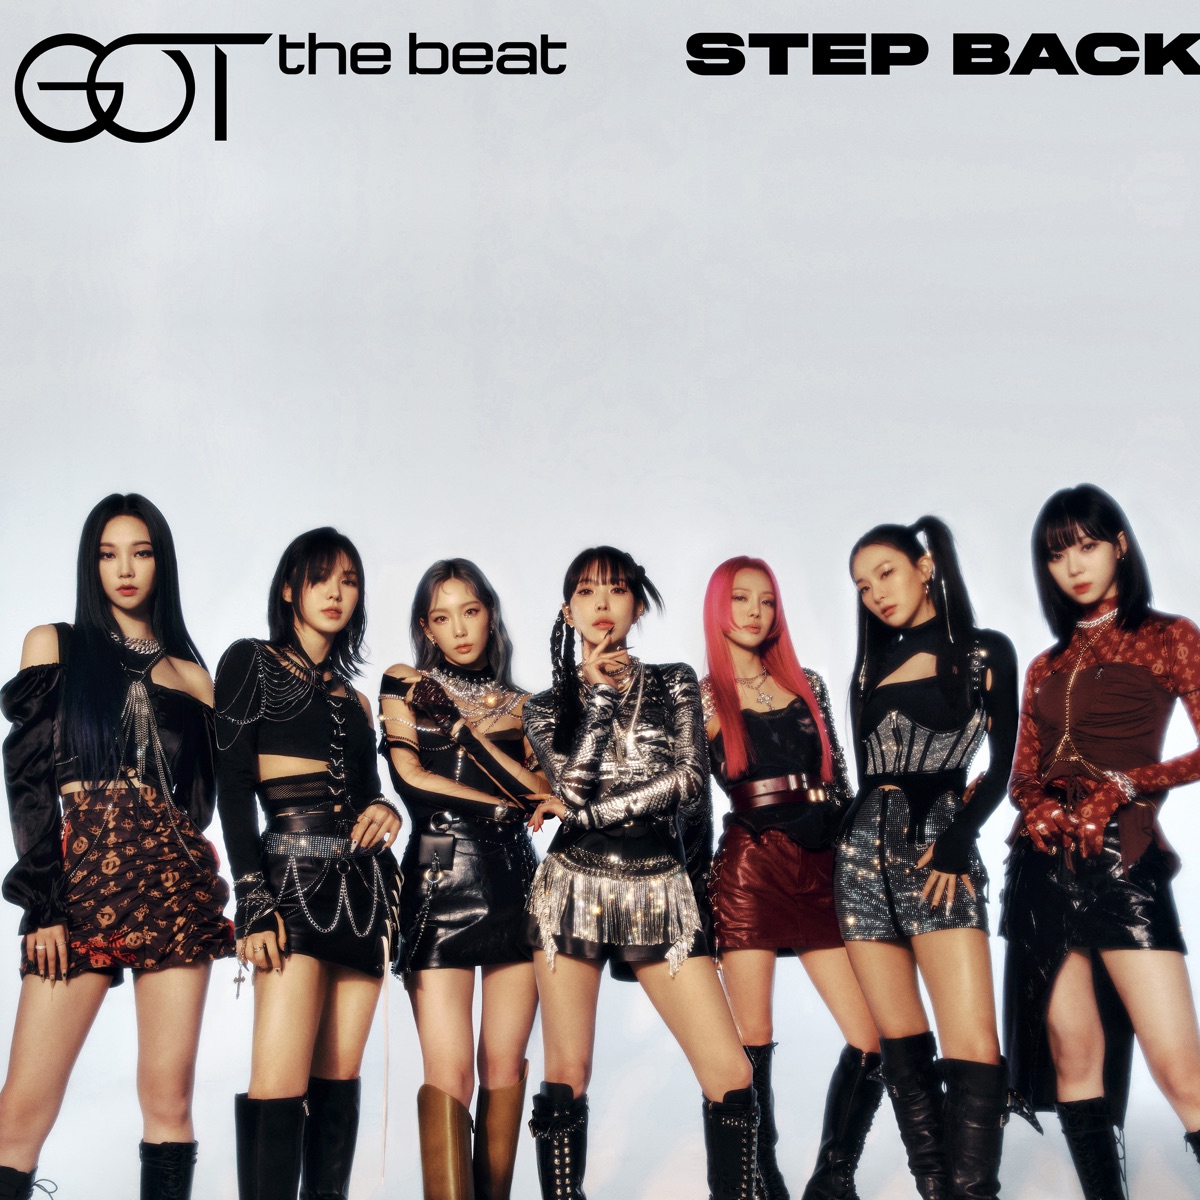 『GOT the beat (Girls On Top) - Step Back 歌詞』収録の『Step Back』ジャケット